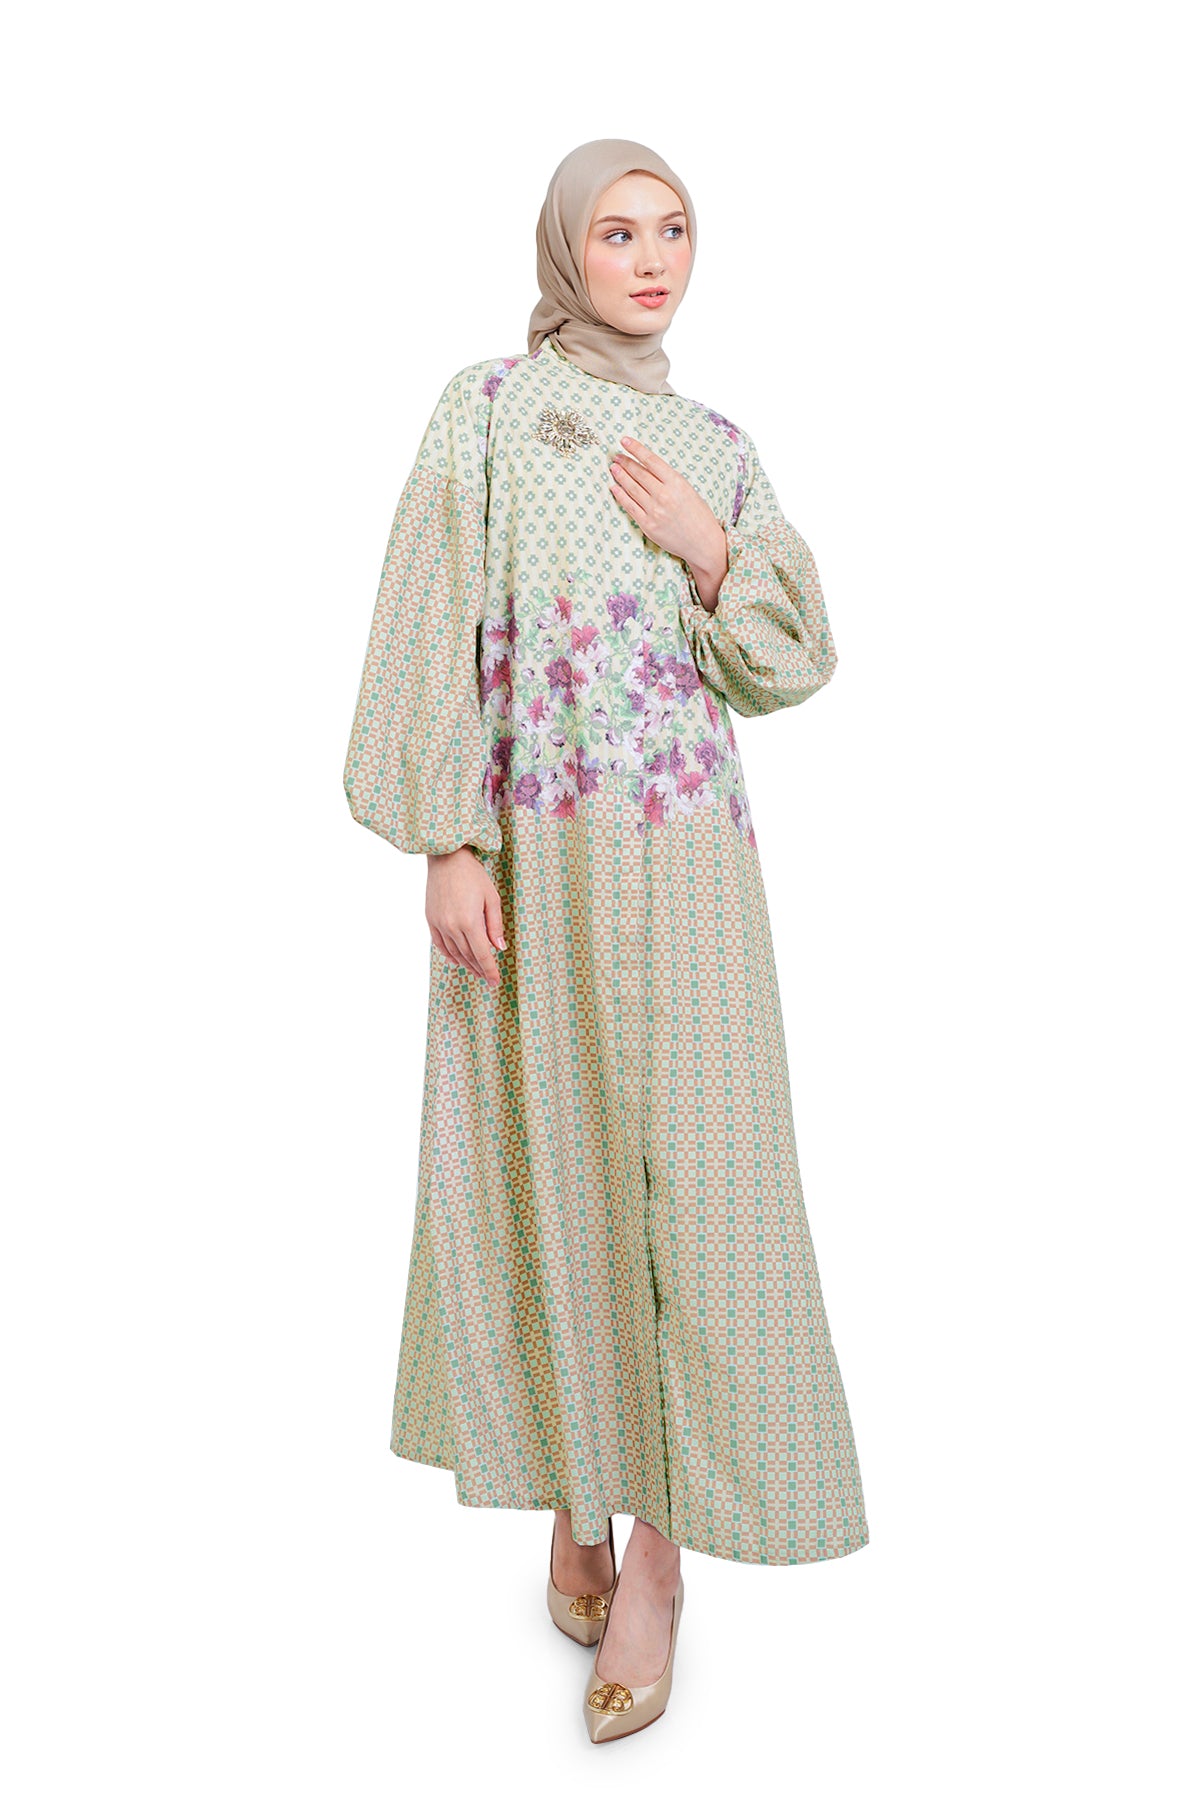 Dreamtale Aaira Muslimah Wear Dress Muslimah Plain Kaftan with Two Pockets  Kaftan Dress Como Crepe Abaya